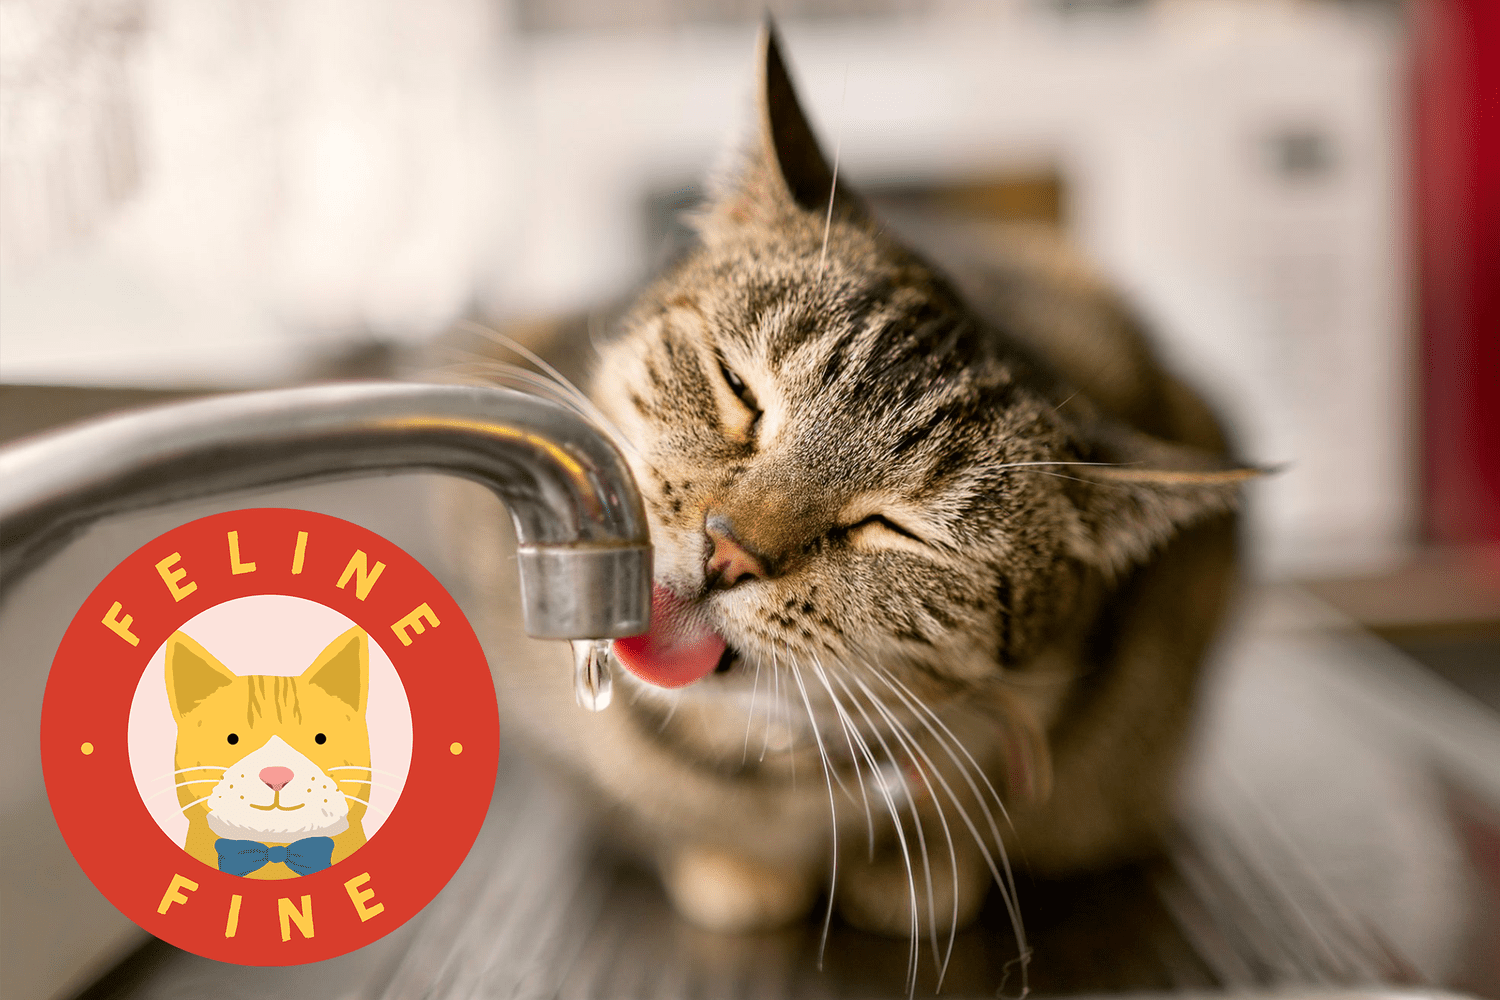 cat drinking tap with Feline Fine logo; referring to kidney disease in cats